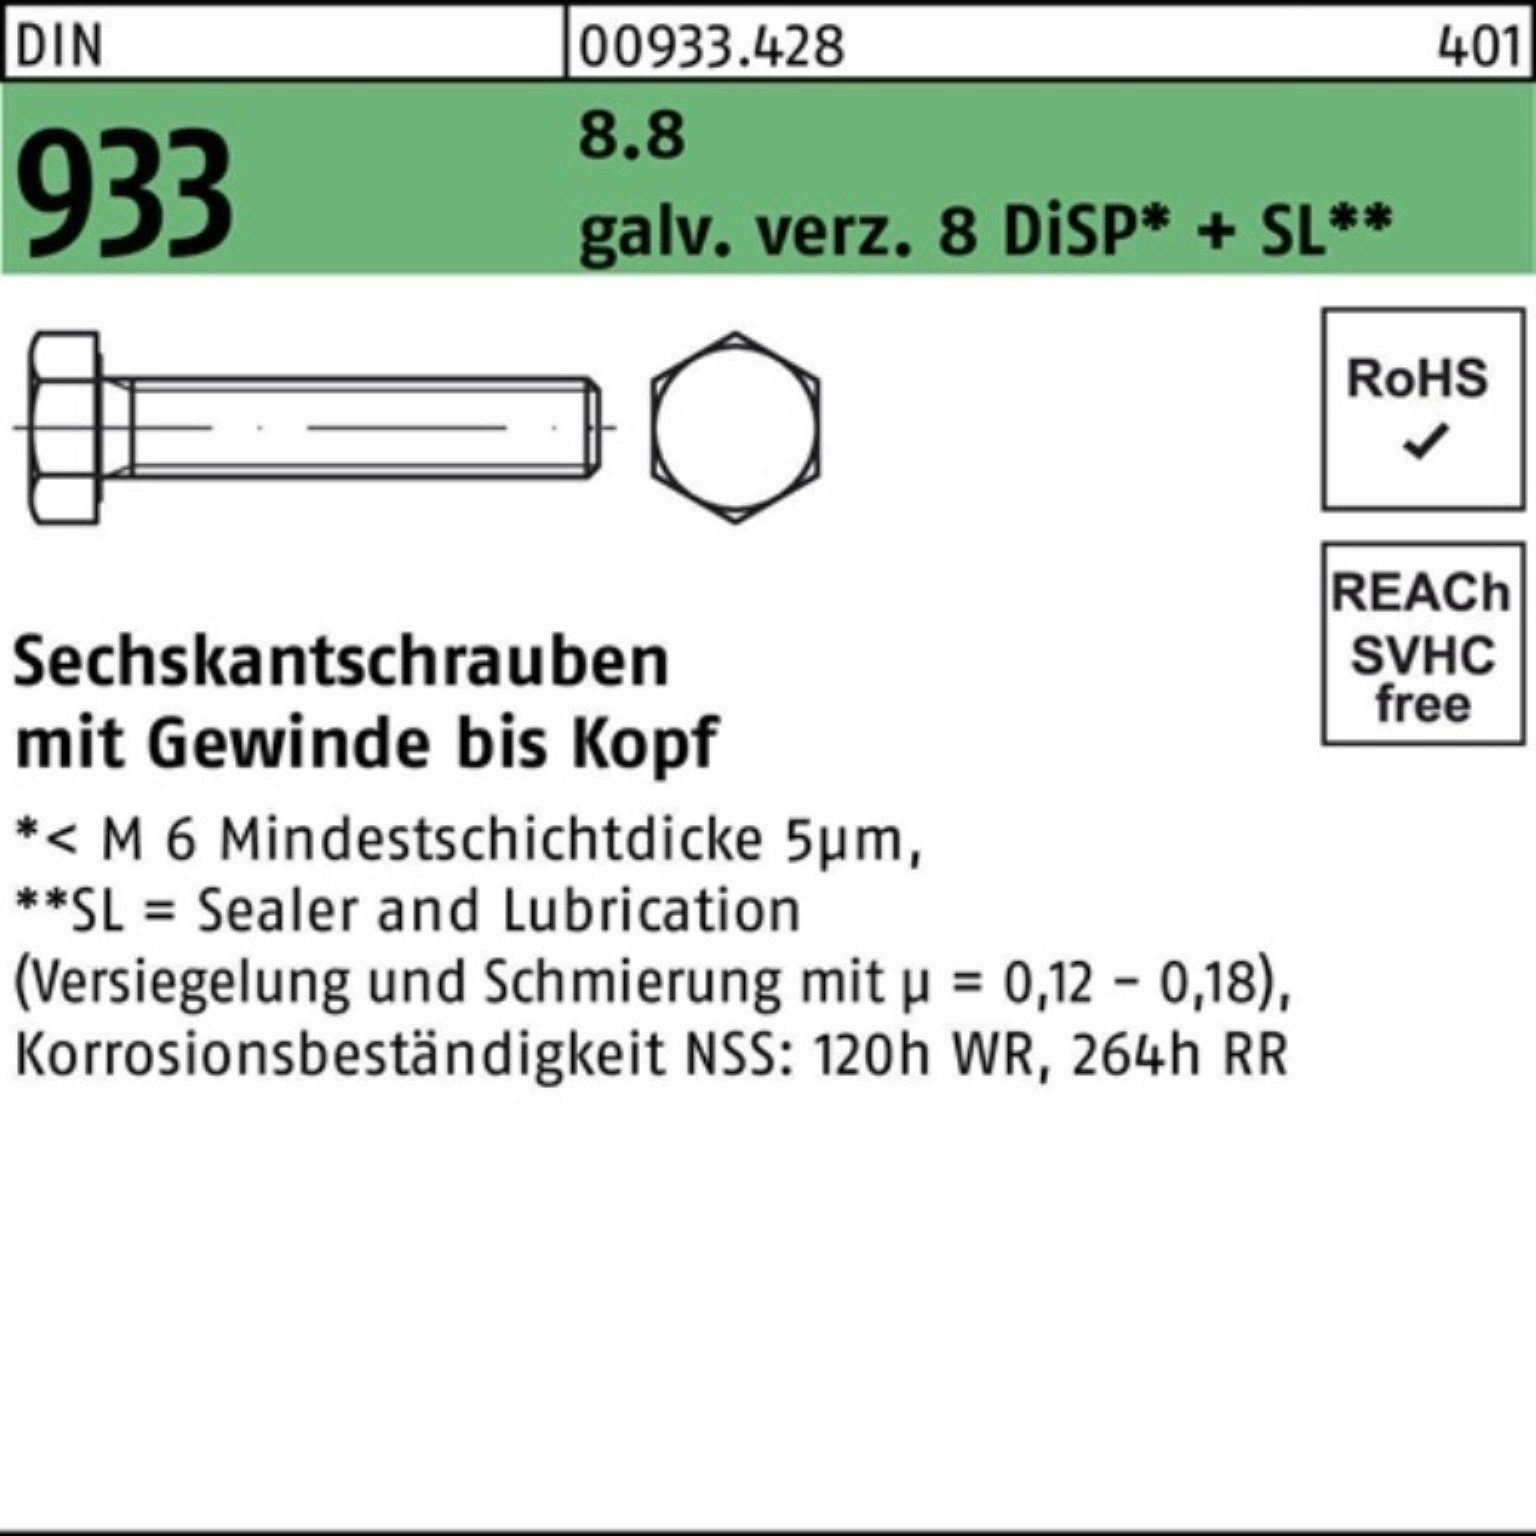 gal Reyher Sechskantschraube 933 8 Pack DIN + 8.8 VG Sechskantschraube SL Zn M16x 20 100er DiSP